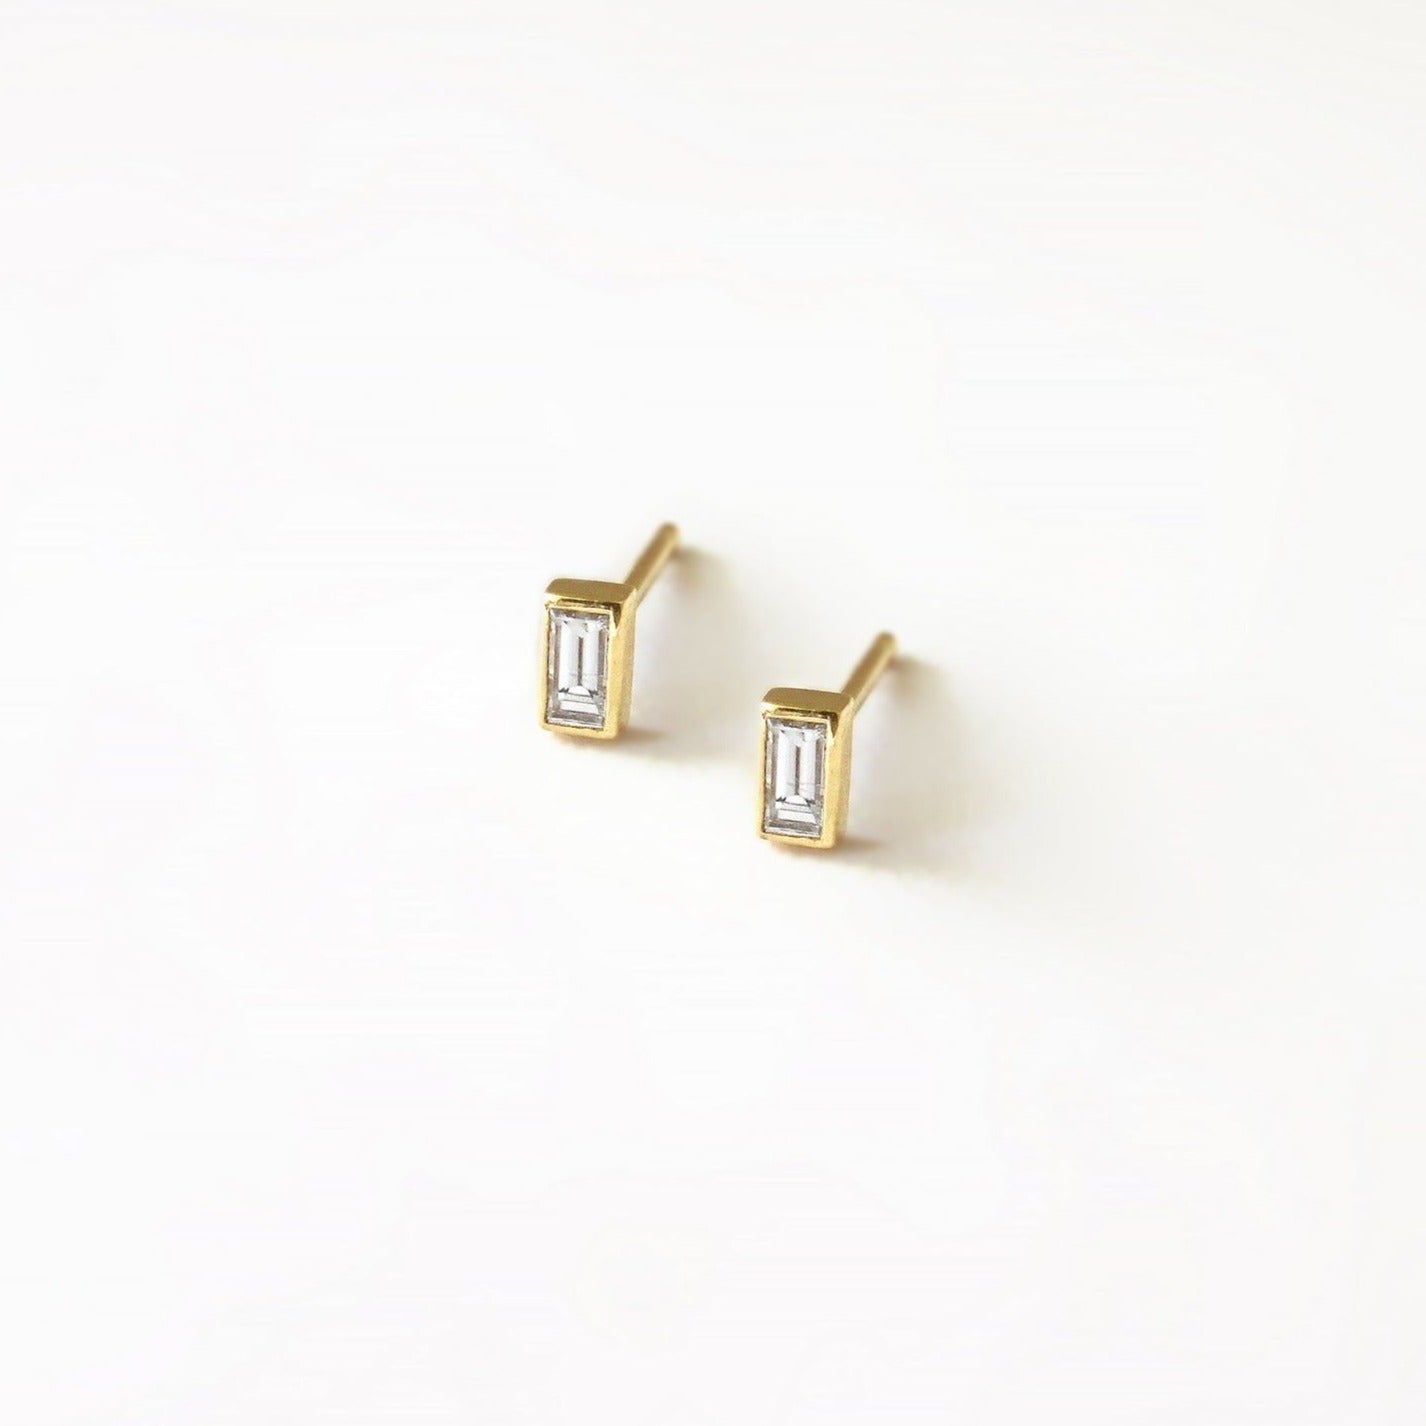 Simple small bezel set rectangular stud earrings.